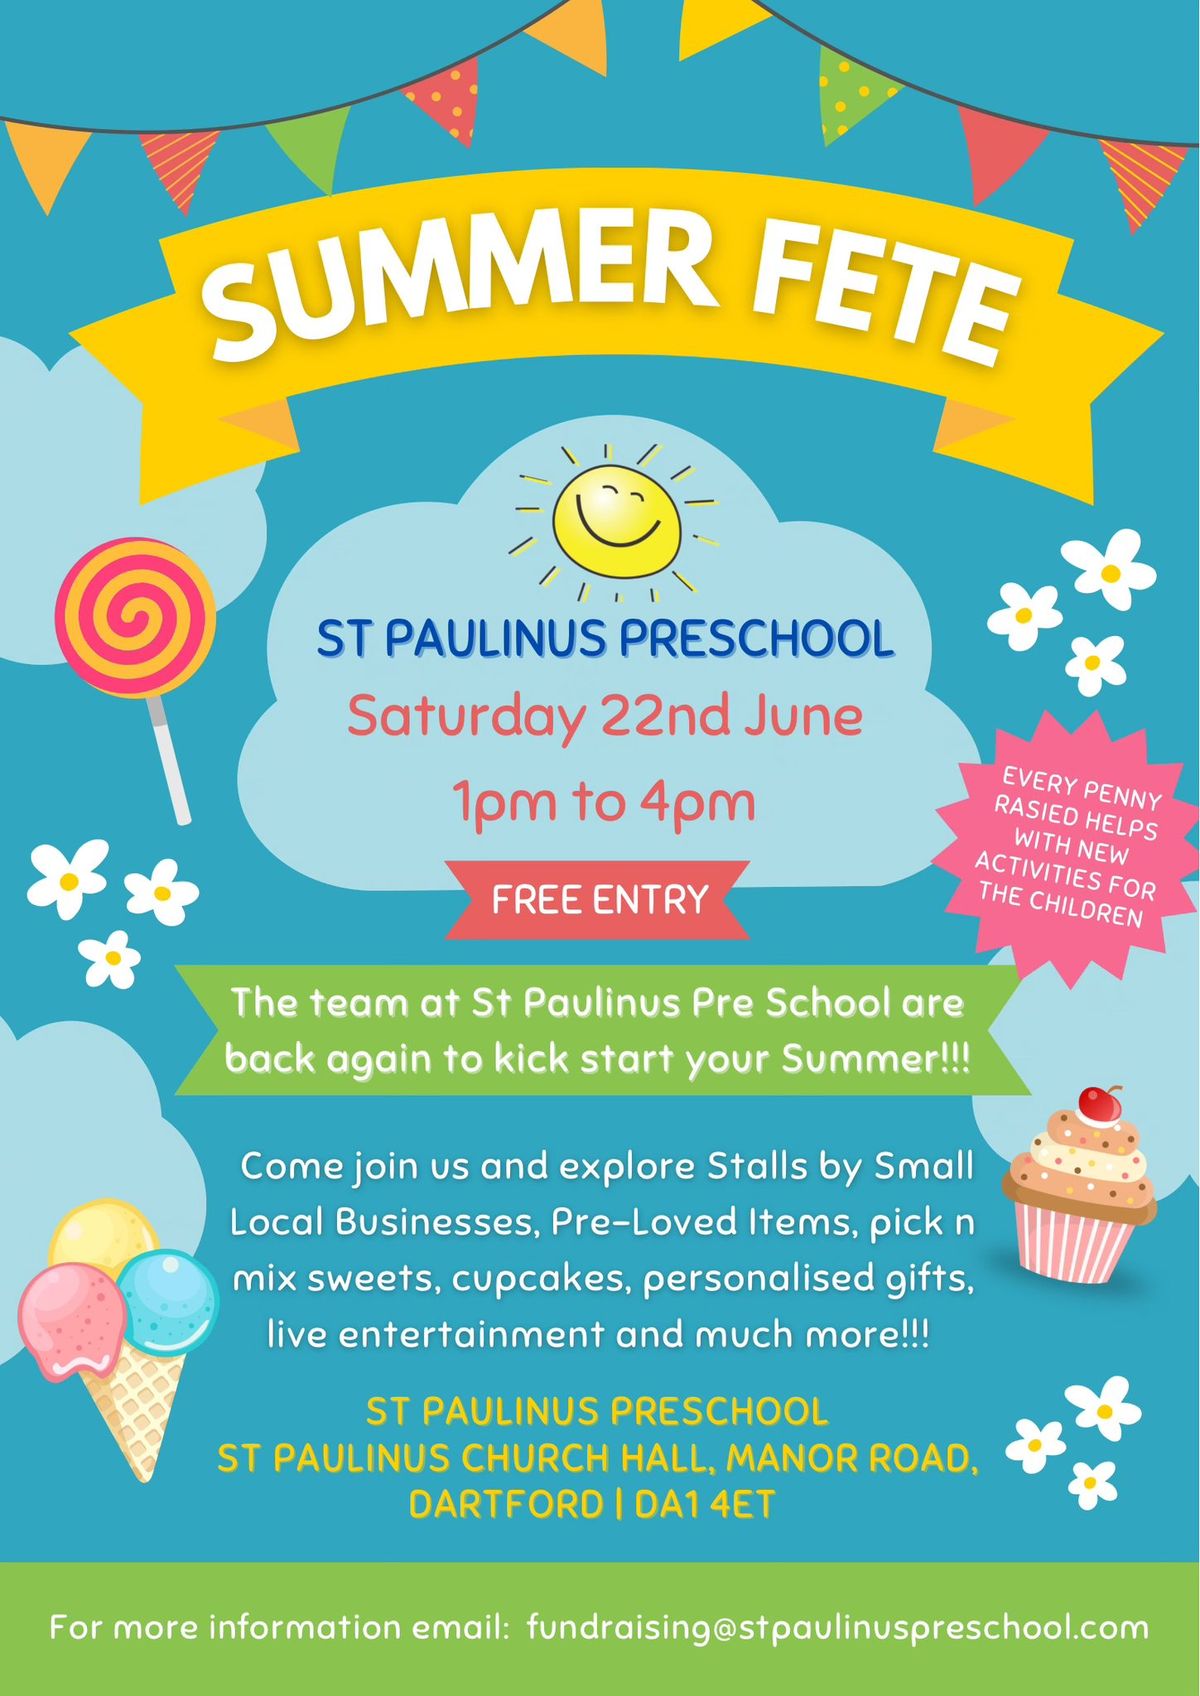 St Paulinus Pre School Summer Fete